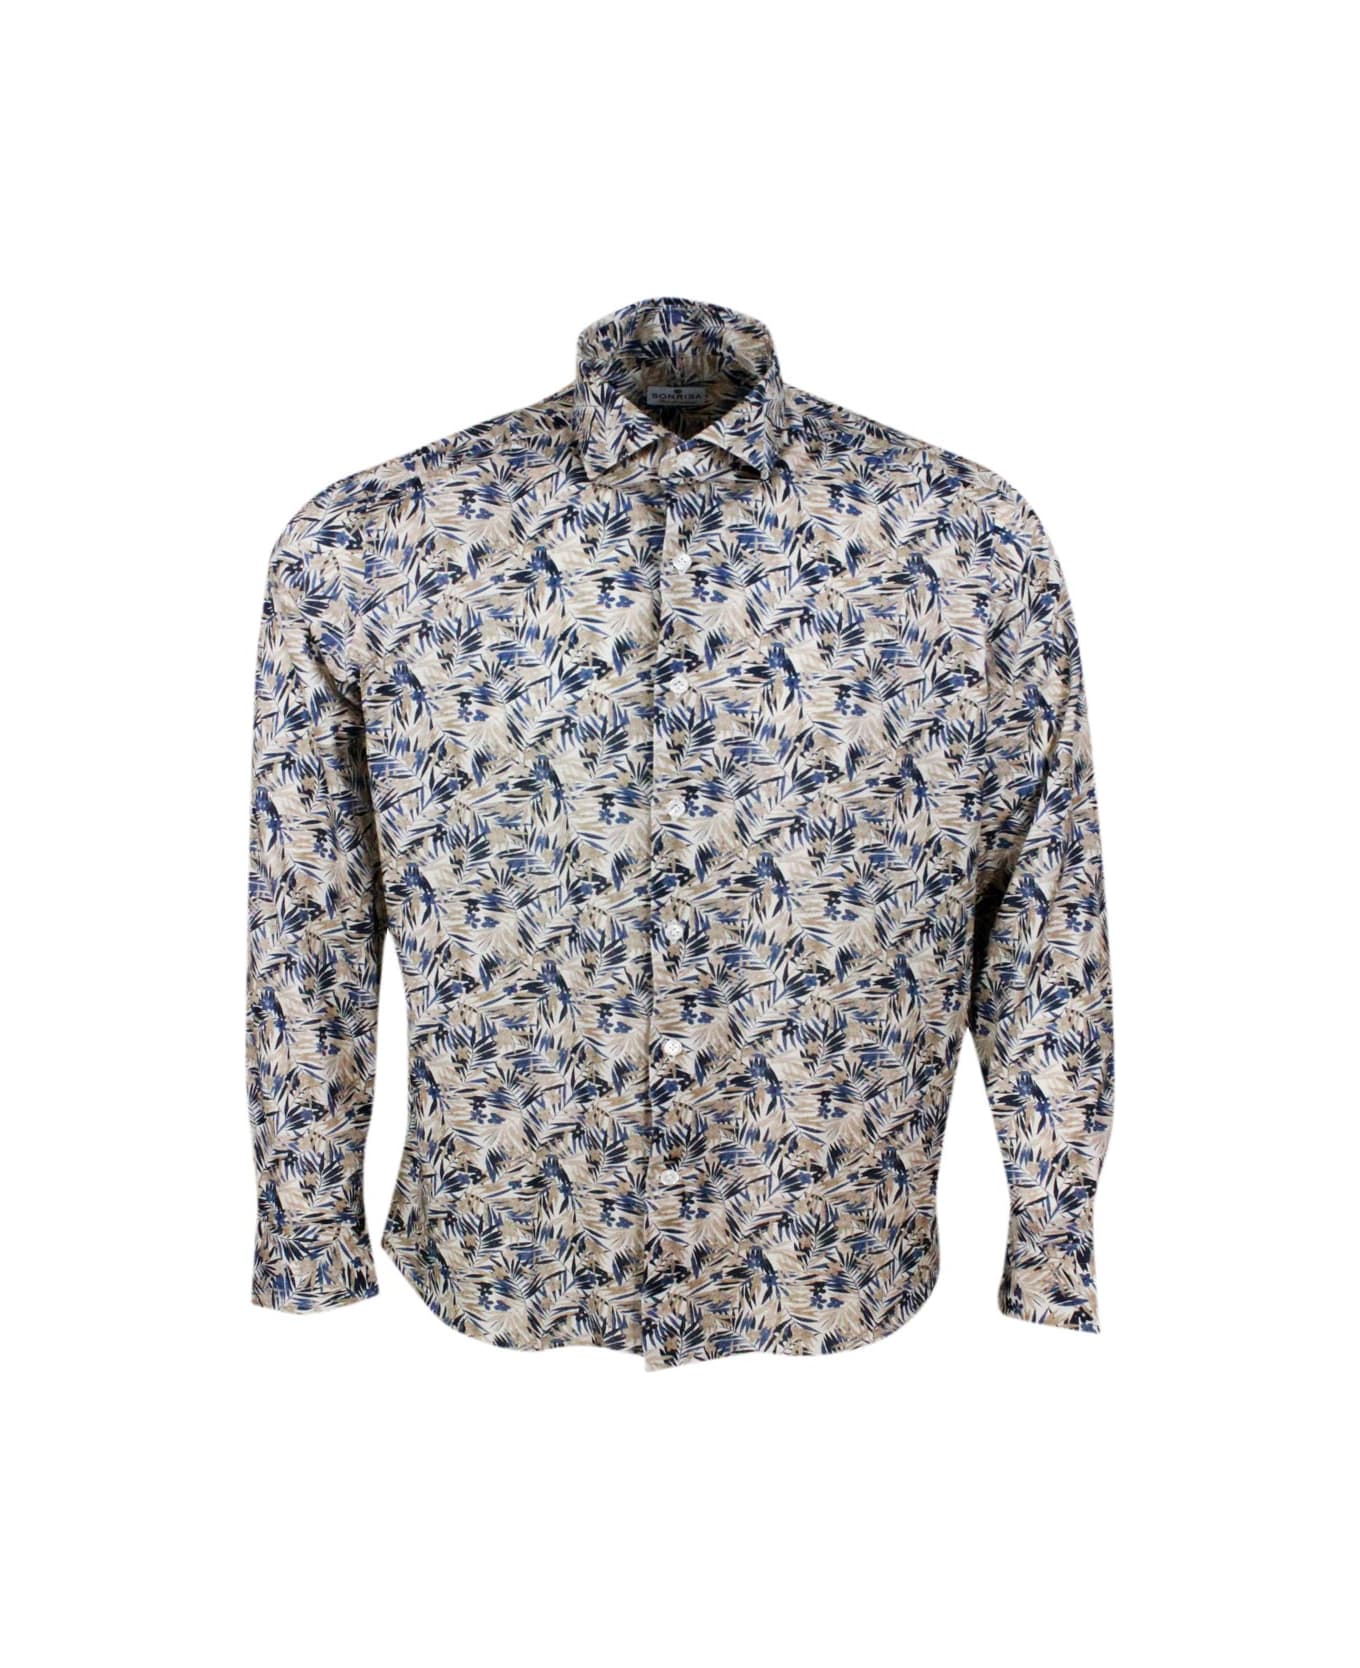 Sonrisa Luxury Shirt In Soft, Precious And Very Fine Stretch Cotton Flower With Spread Collar In Fern Print - Beige シャツ